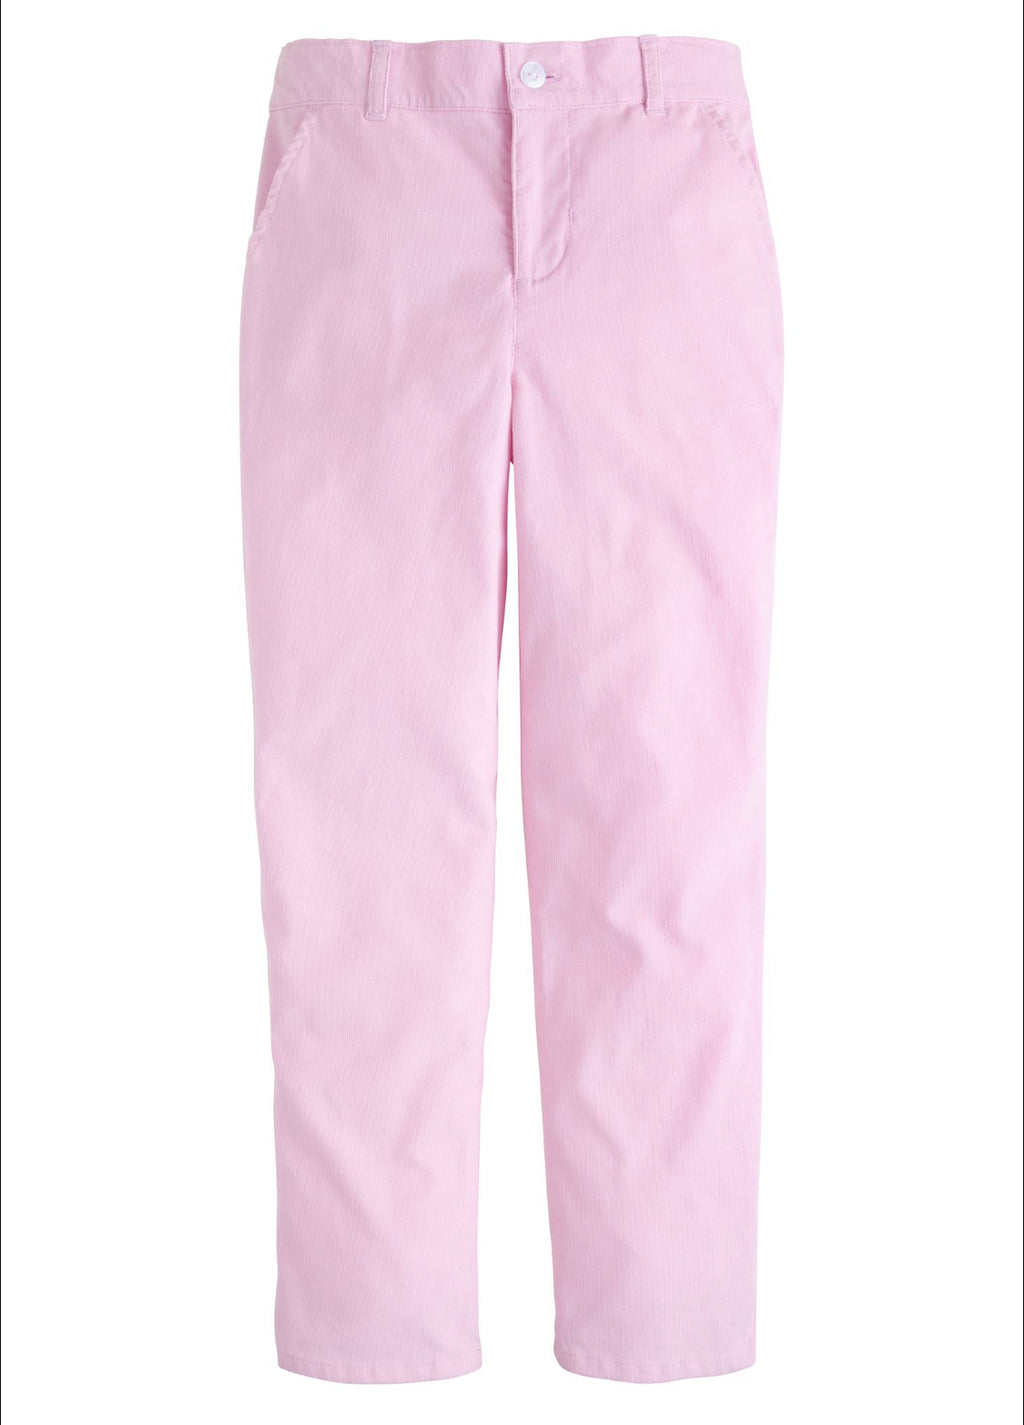 Skinny Pant - Light Pink Corduroy